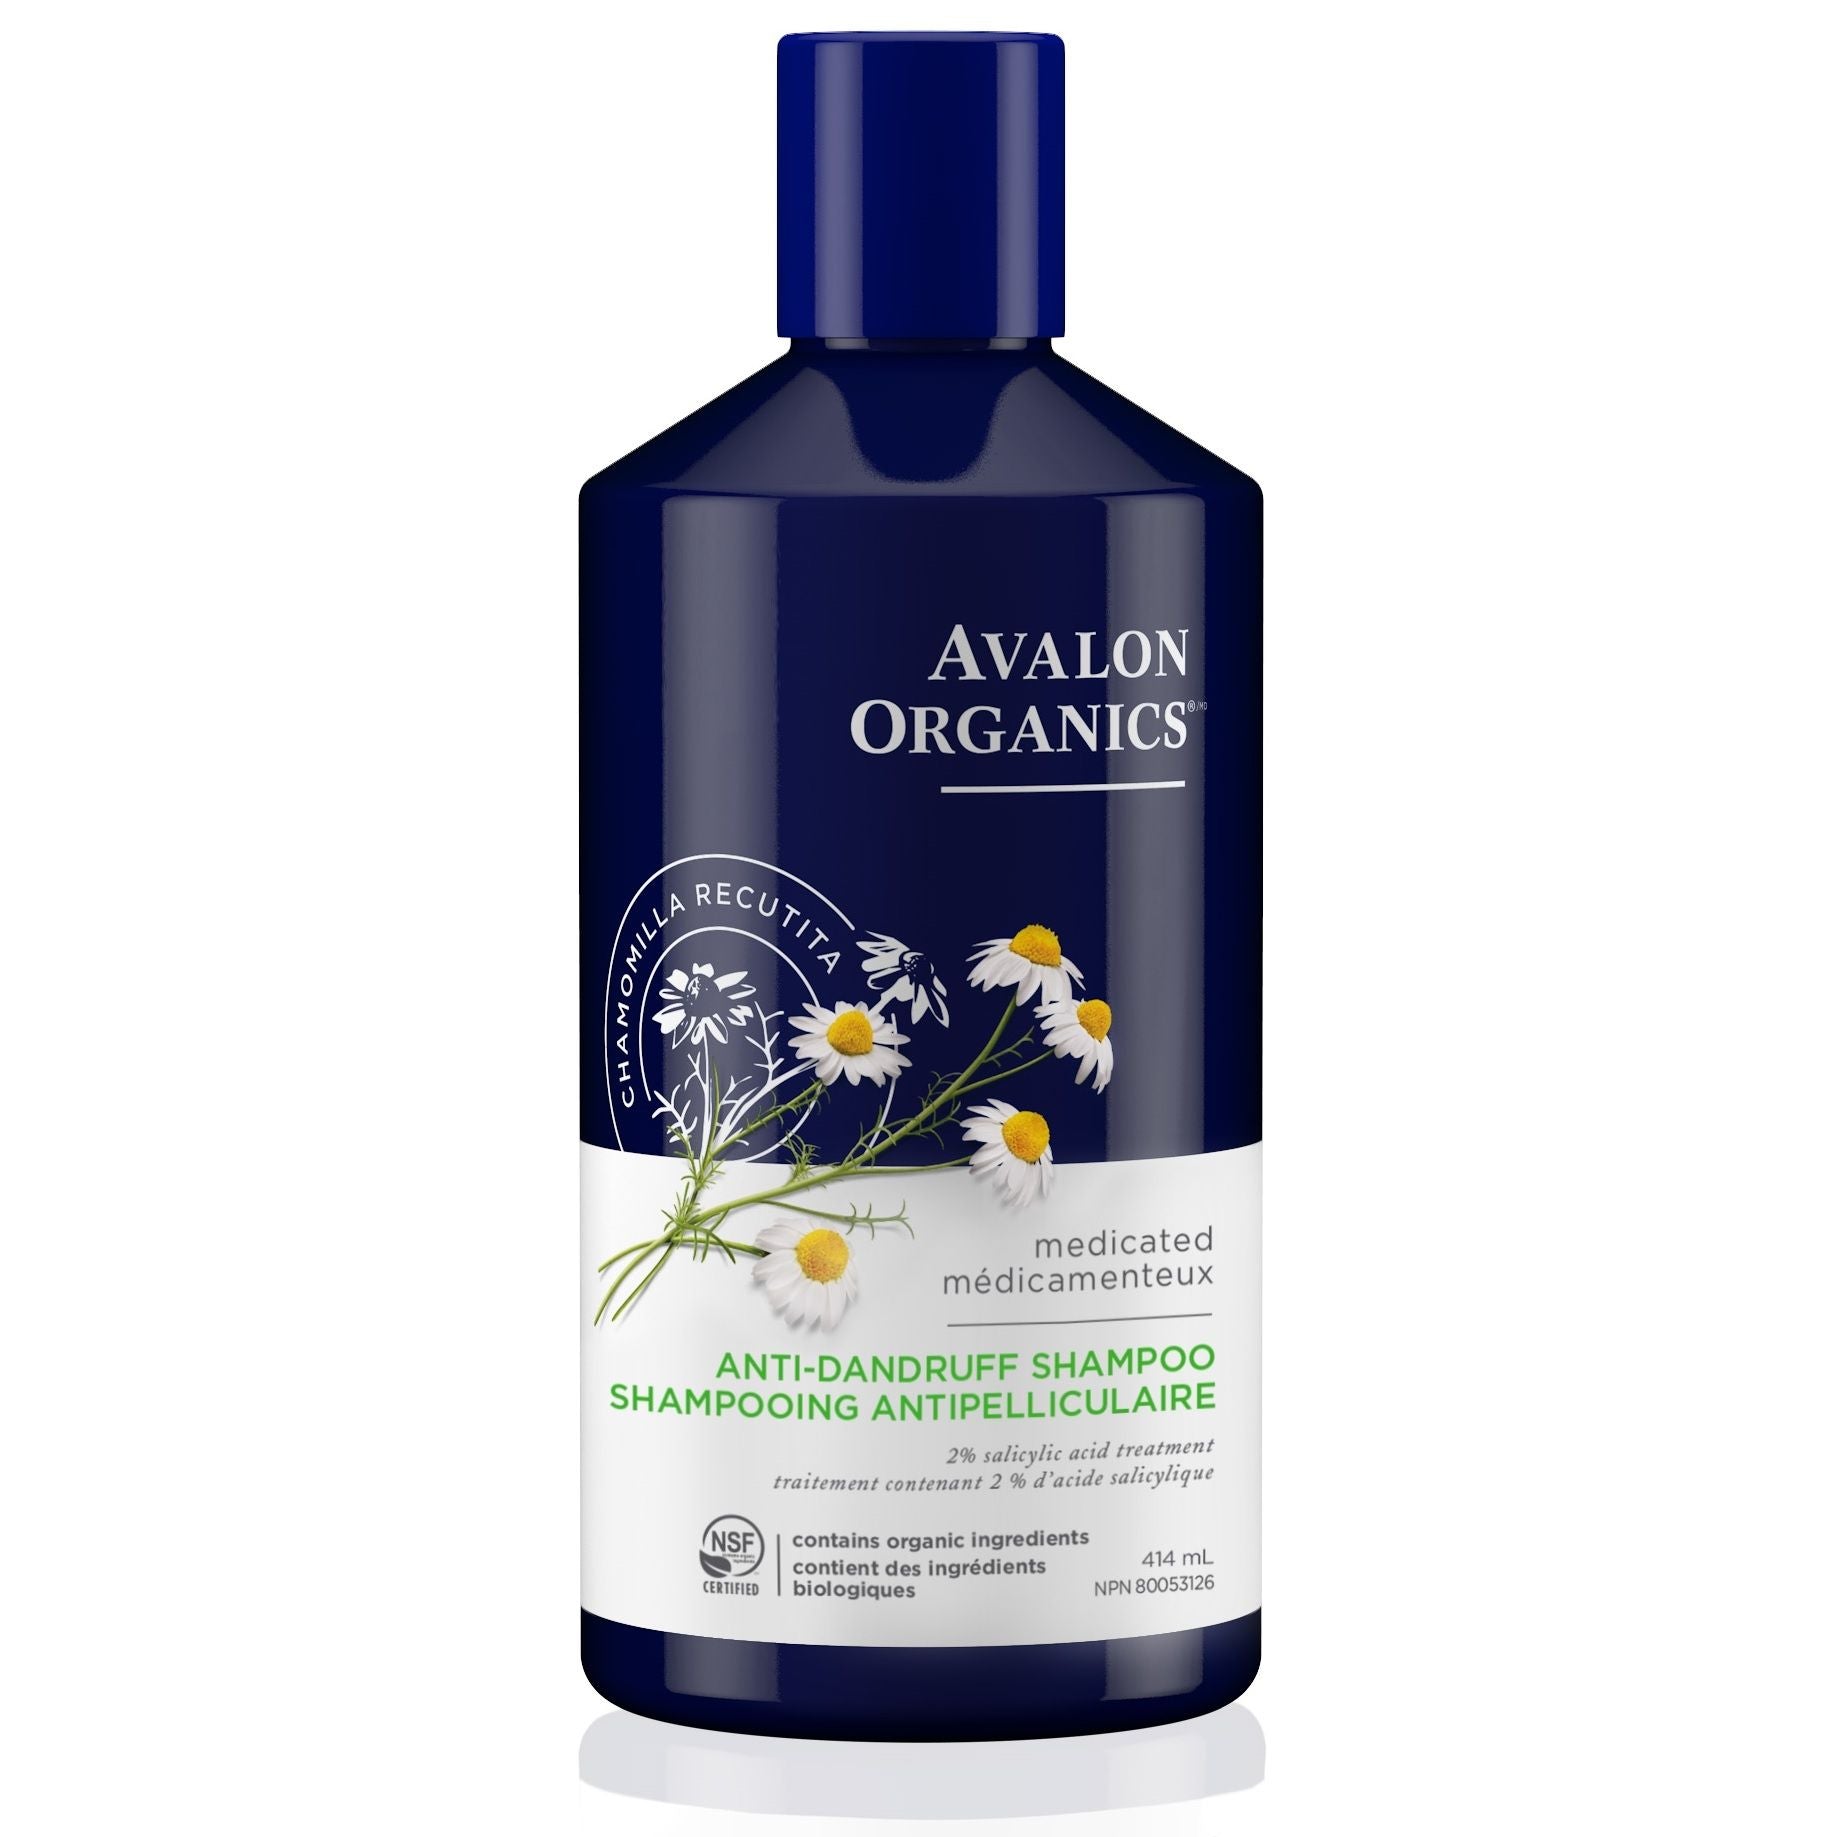 Avalon Organics Anti-Dandruff Shampoo 414ml